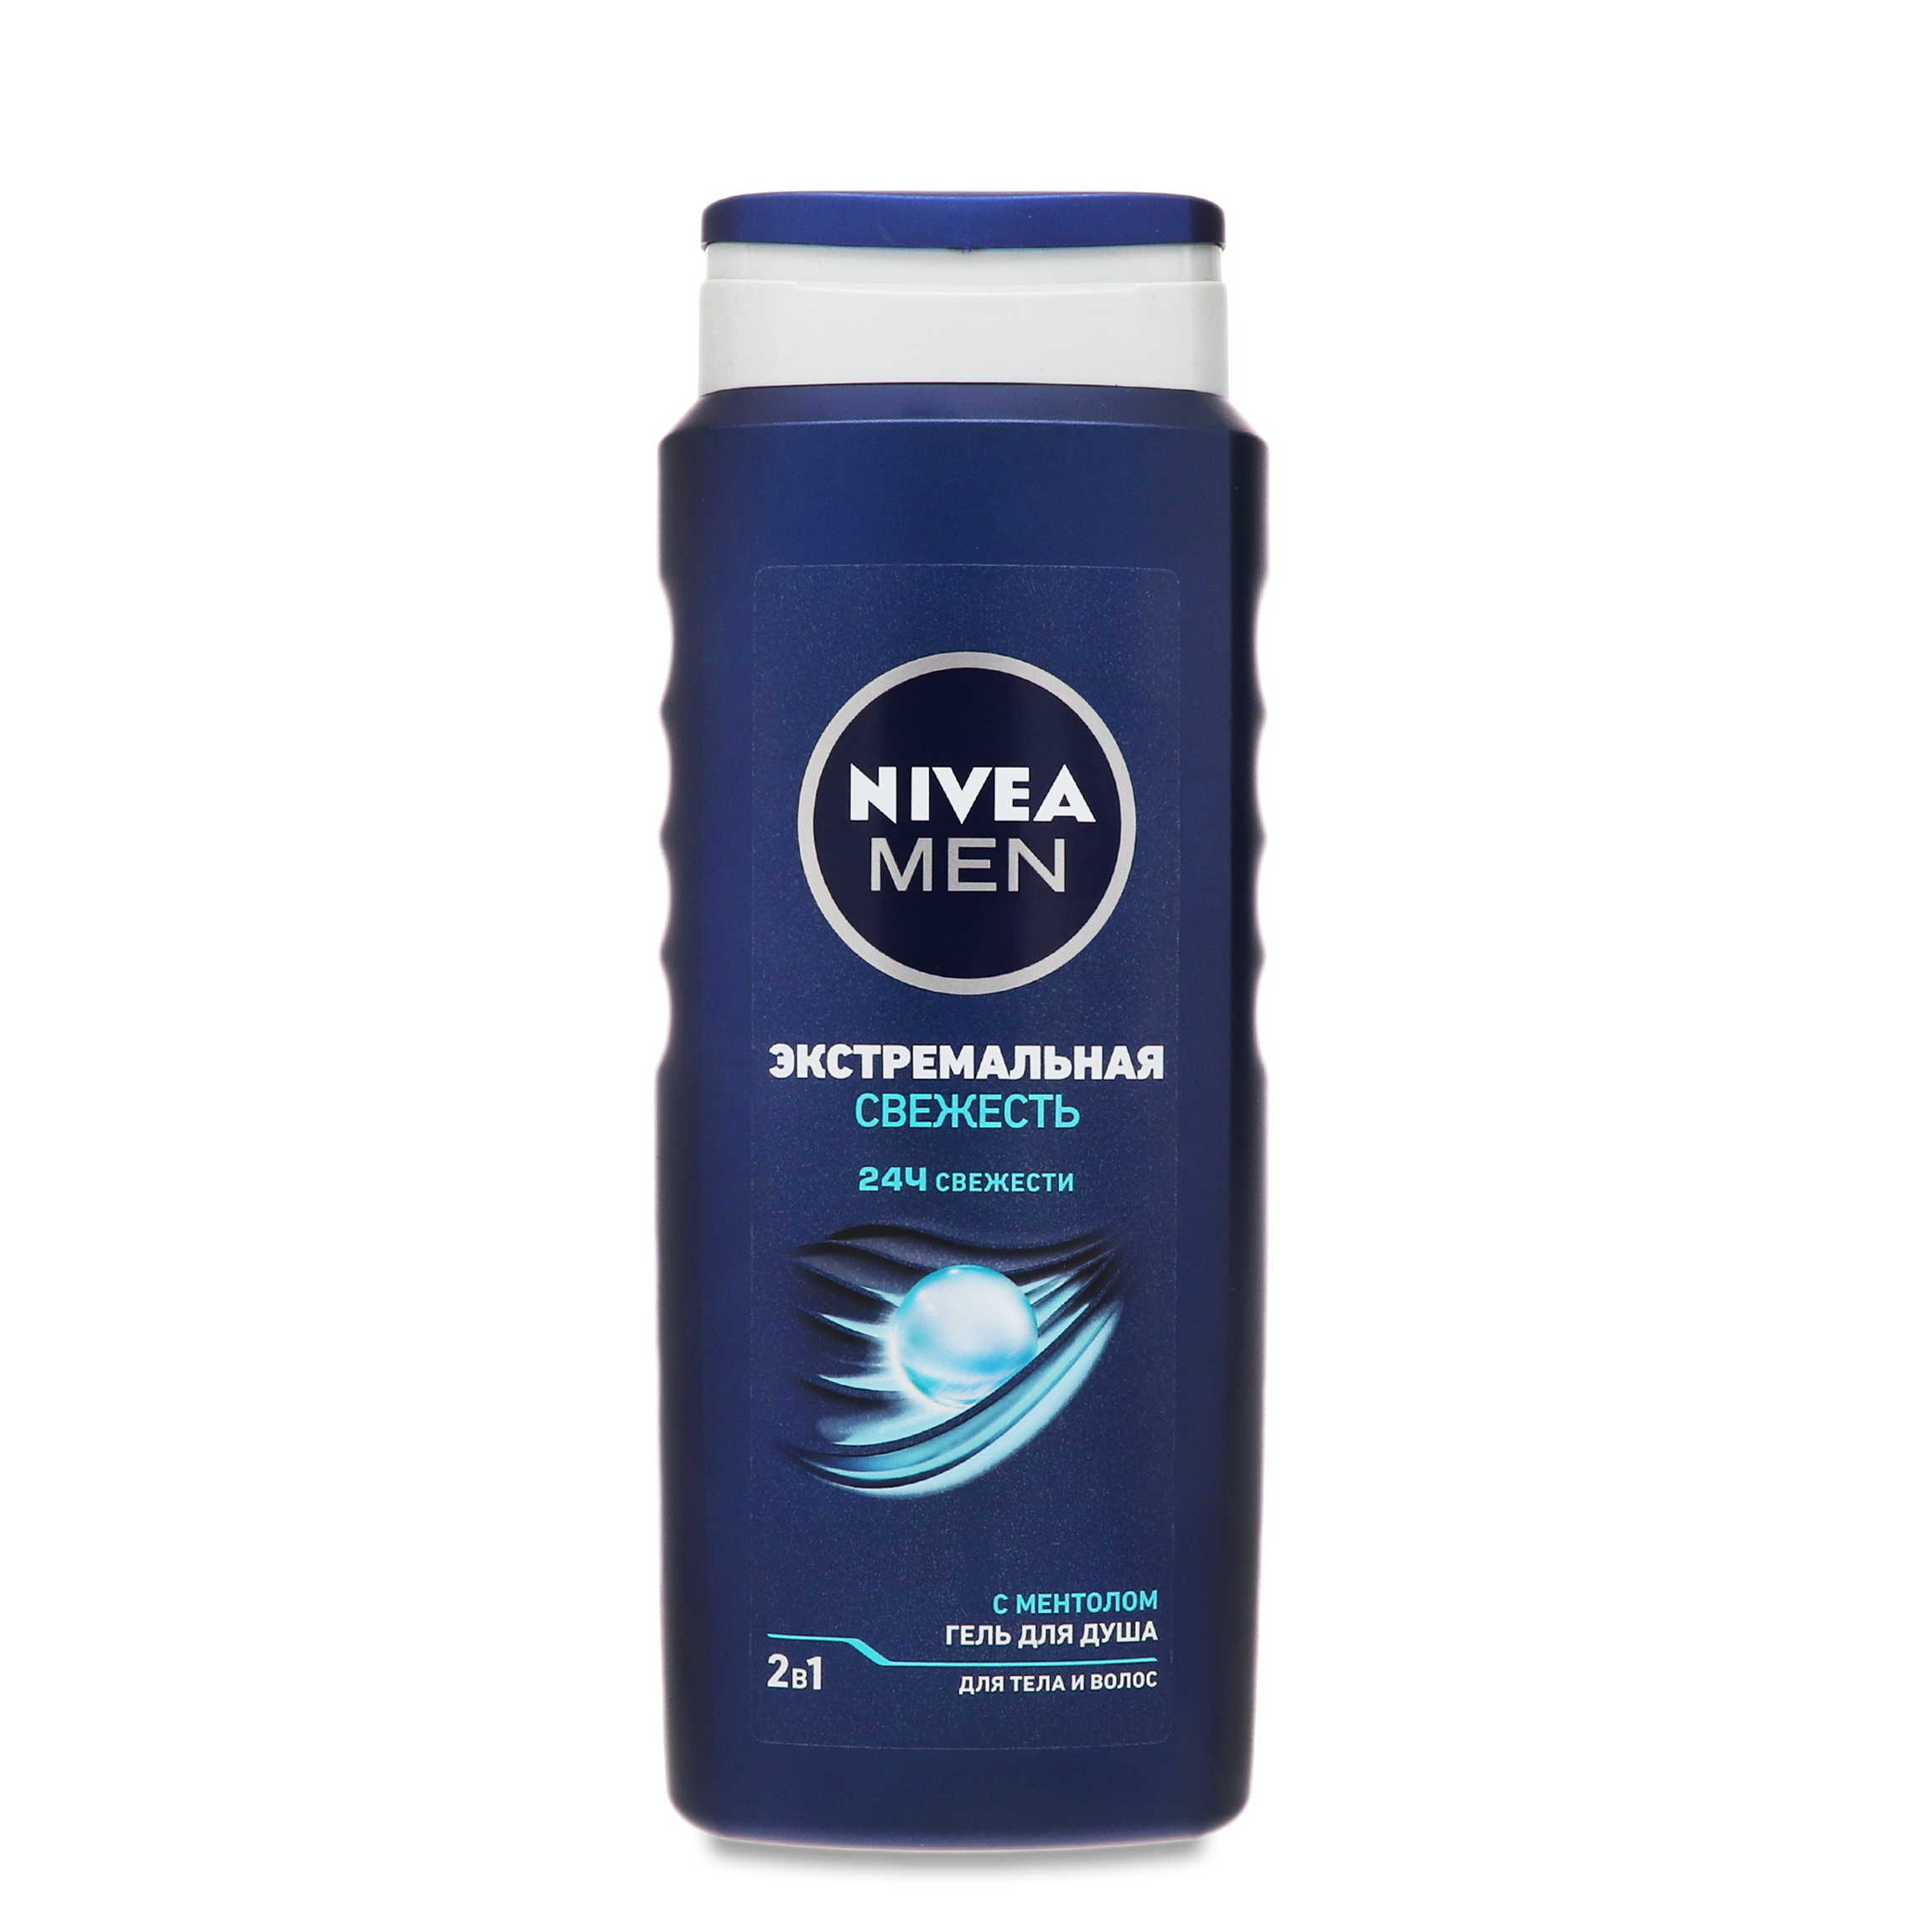 Nivea Men 2in1 Extreme Freshness Shower Gel for Body and Hair 500ml